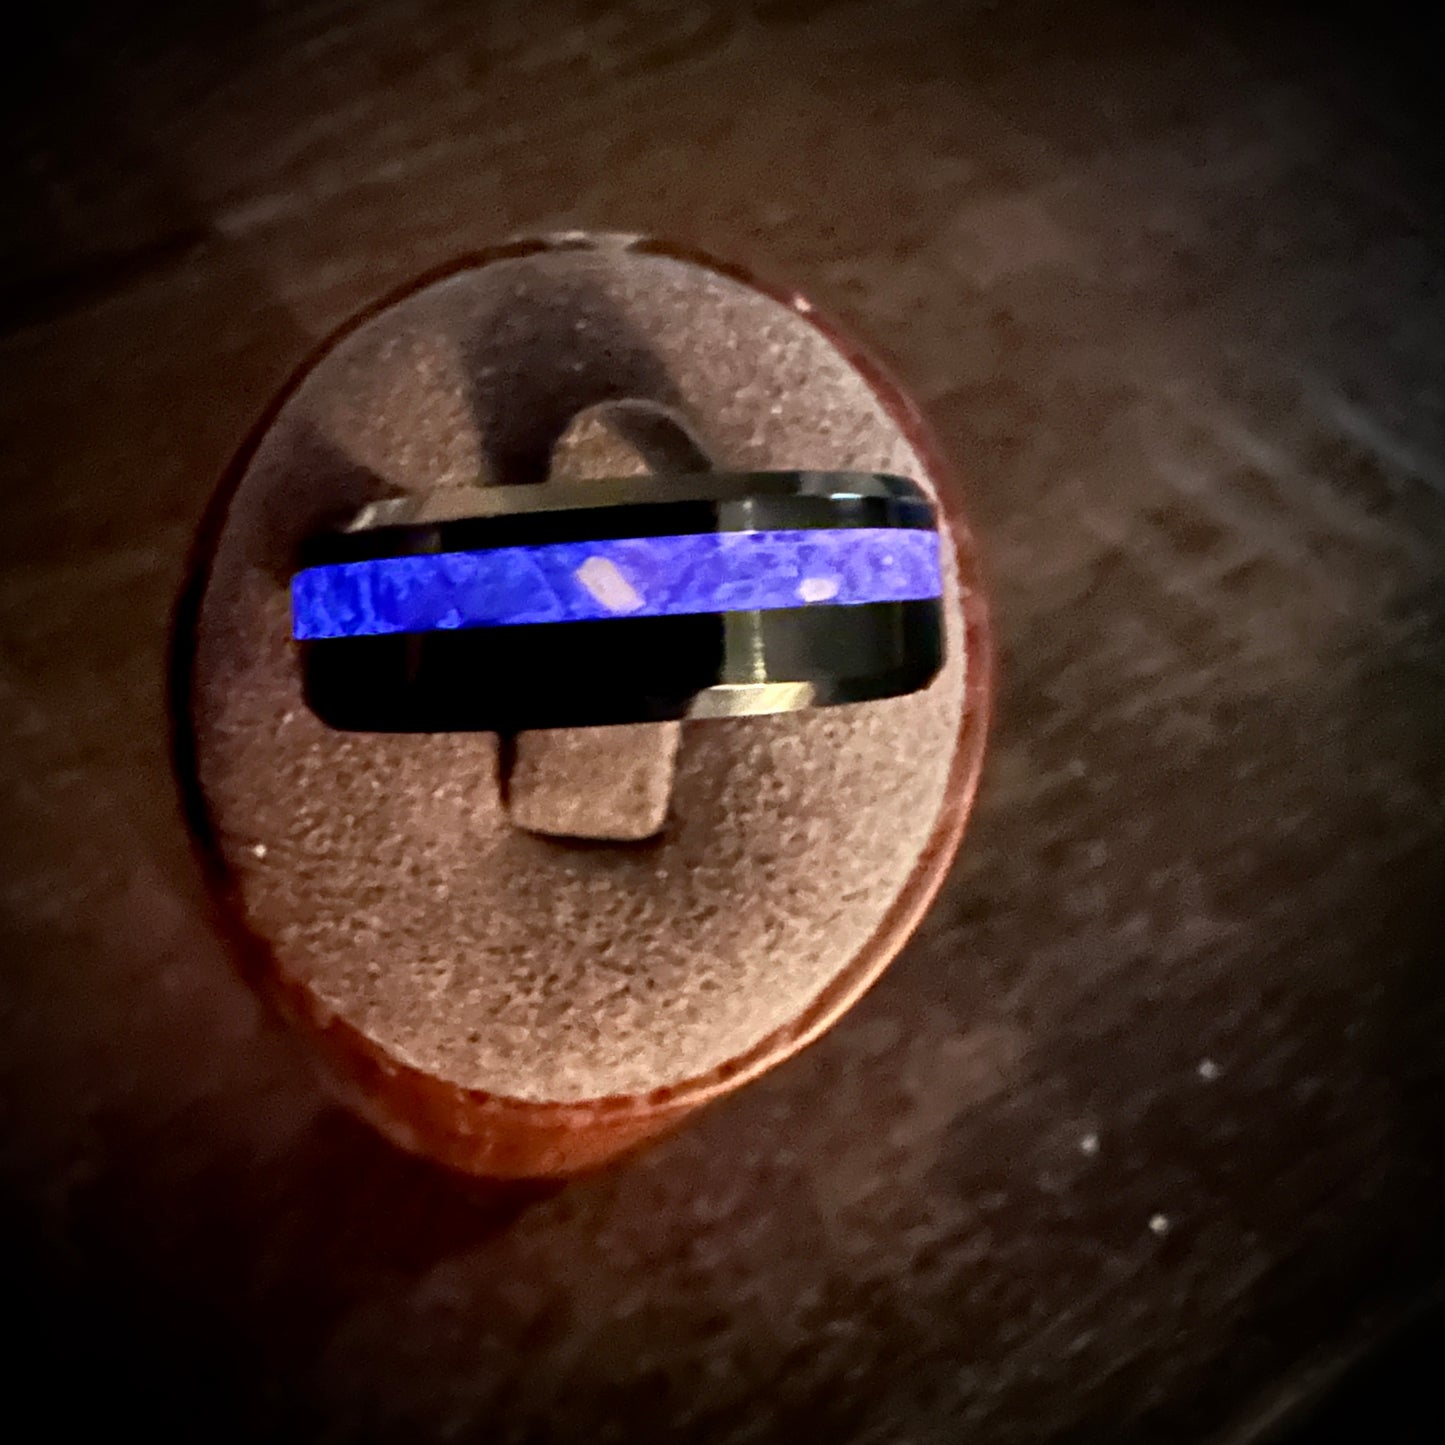 8mm Black Ceramic off center Cremation Ring